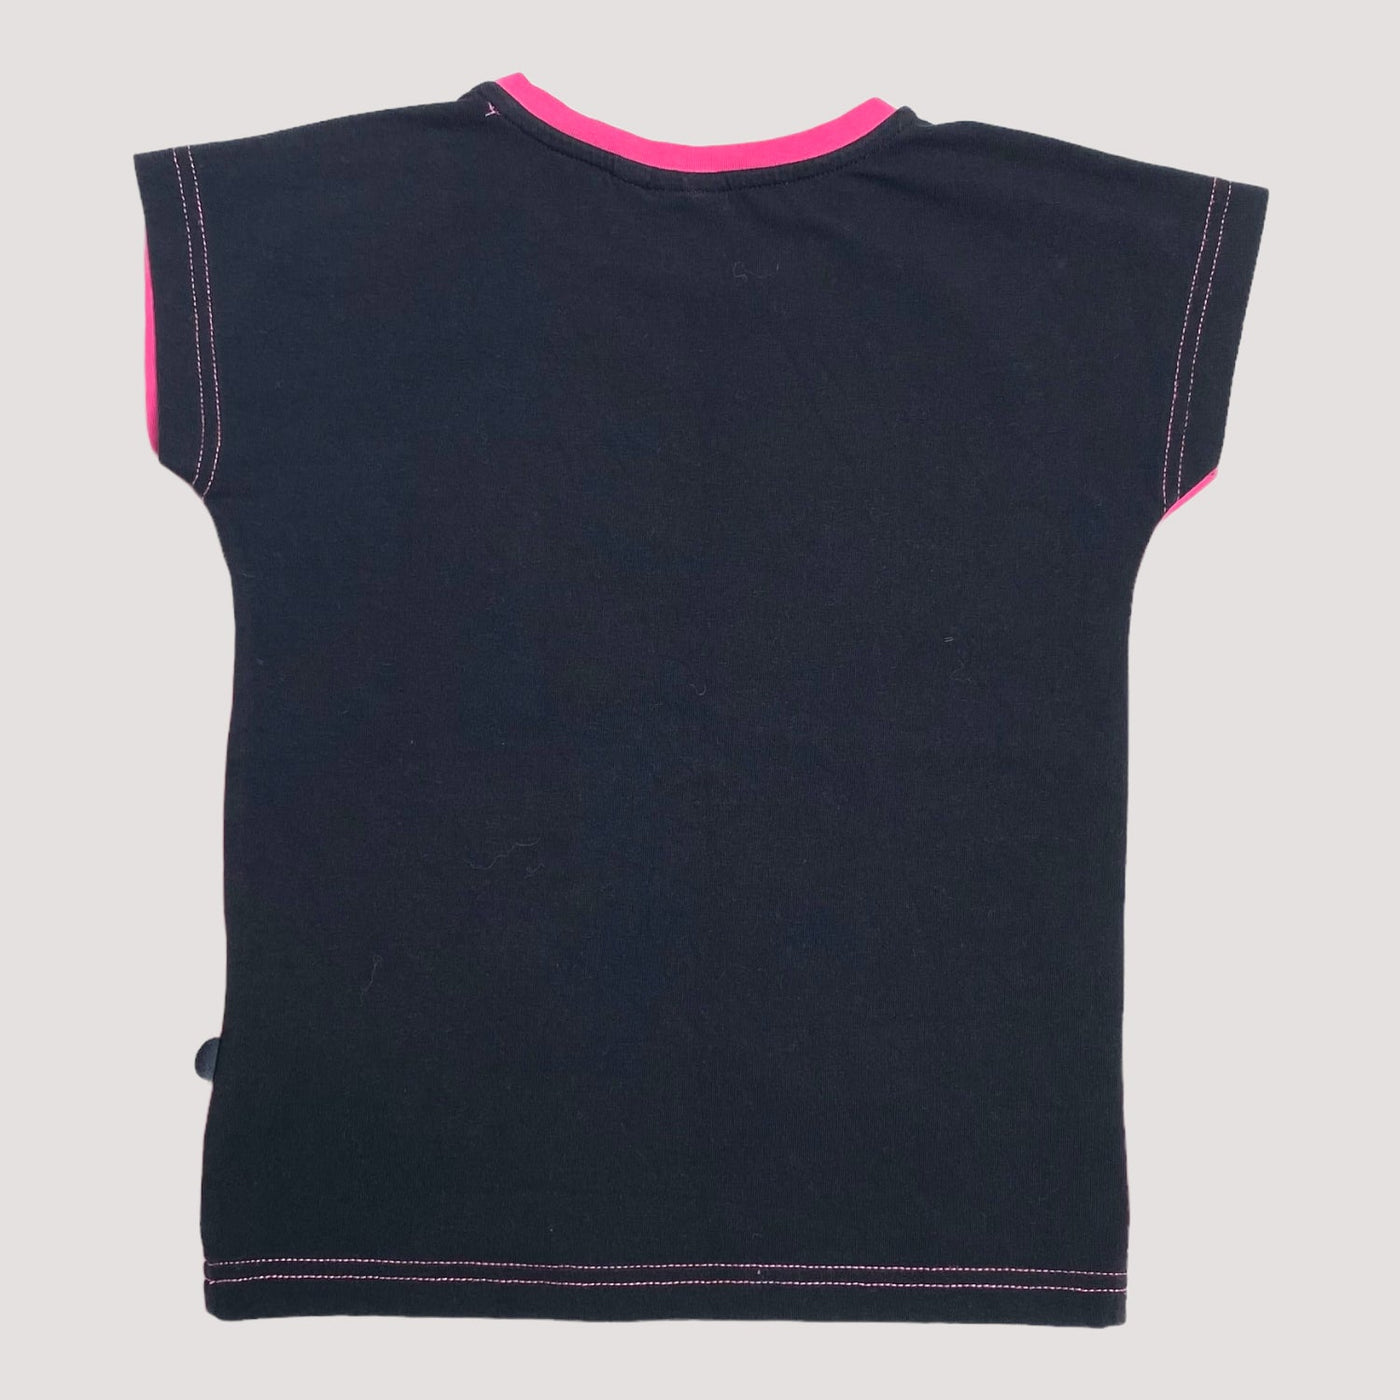 t-shirt, pink | 98/104cm